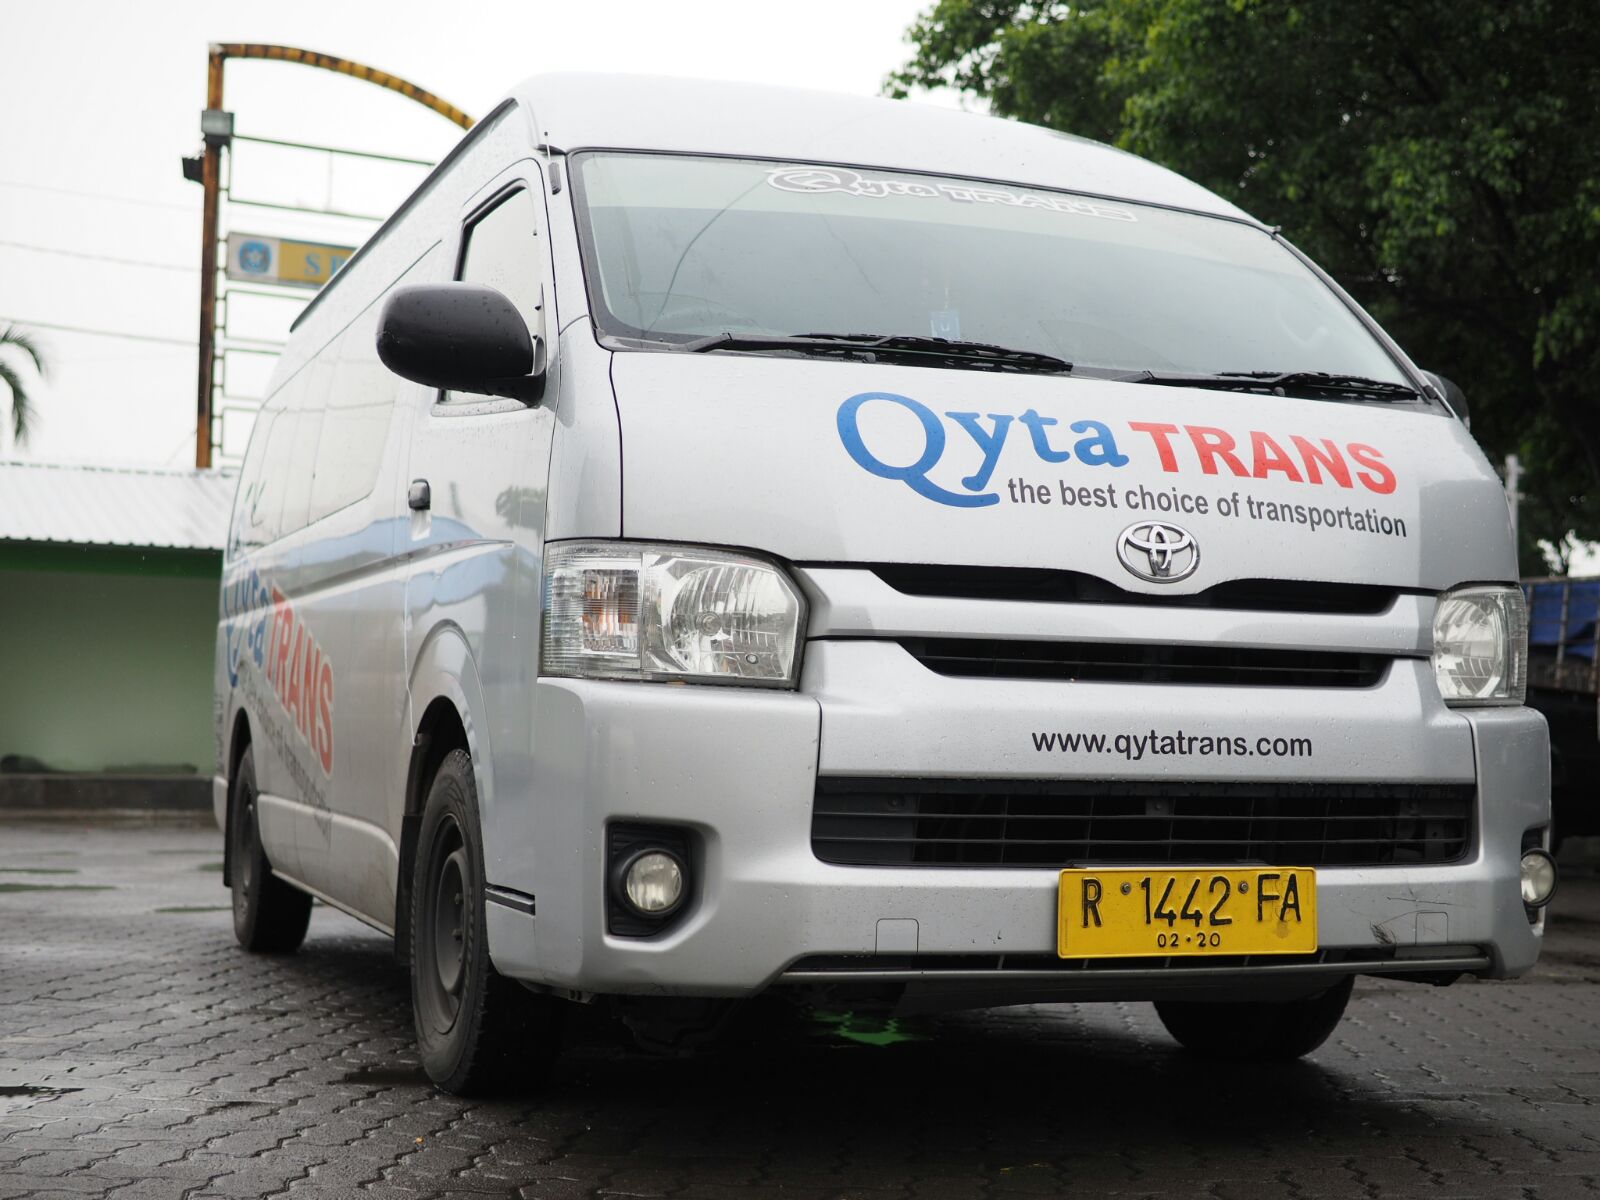 qyta trans travel